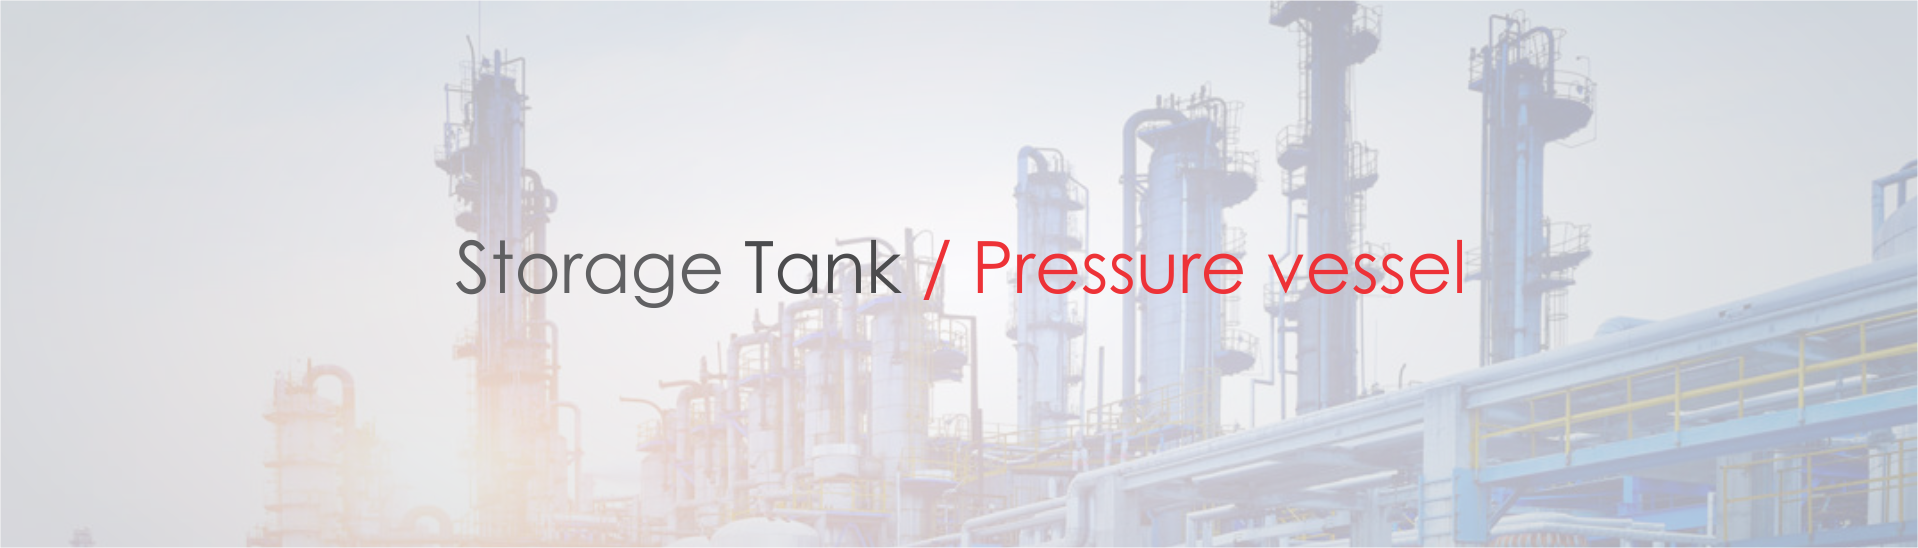 Storage Tanks and Pressure Vessel